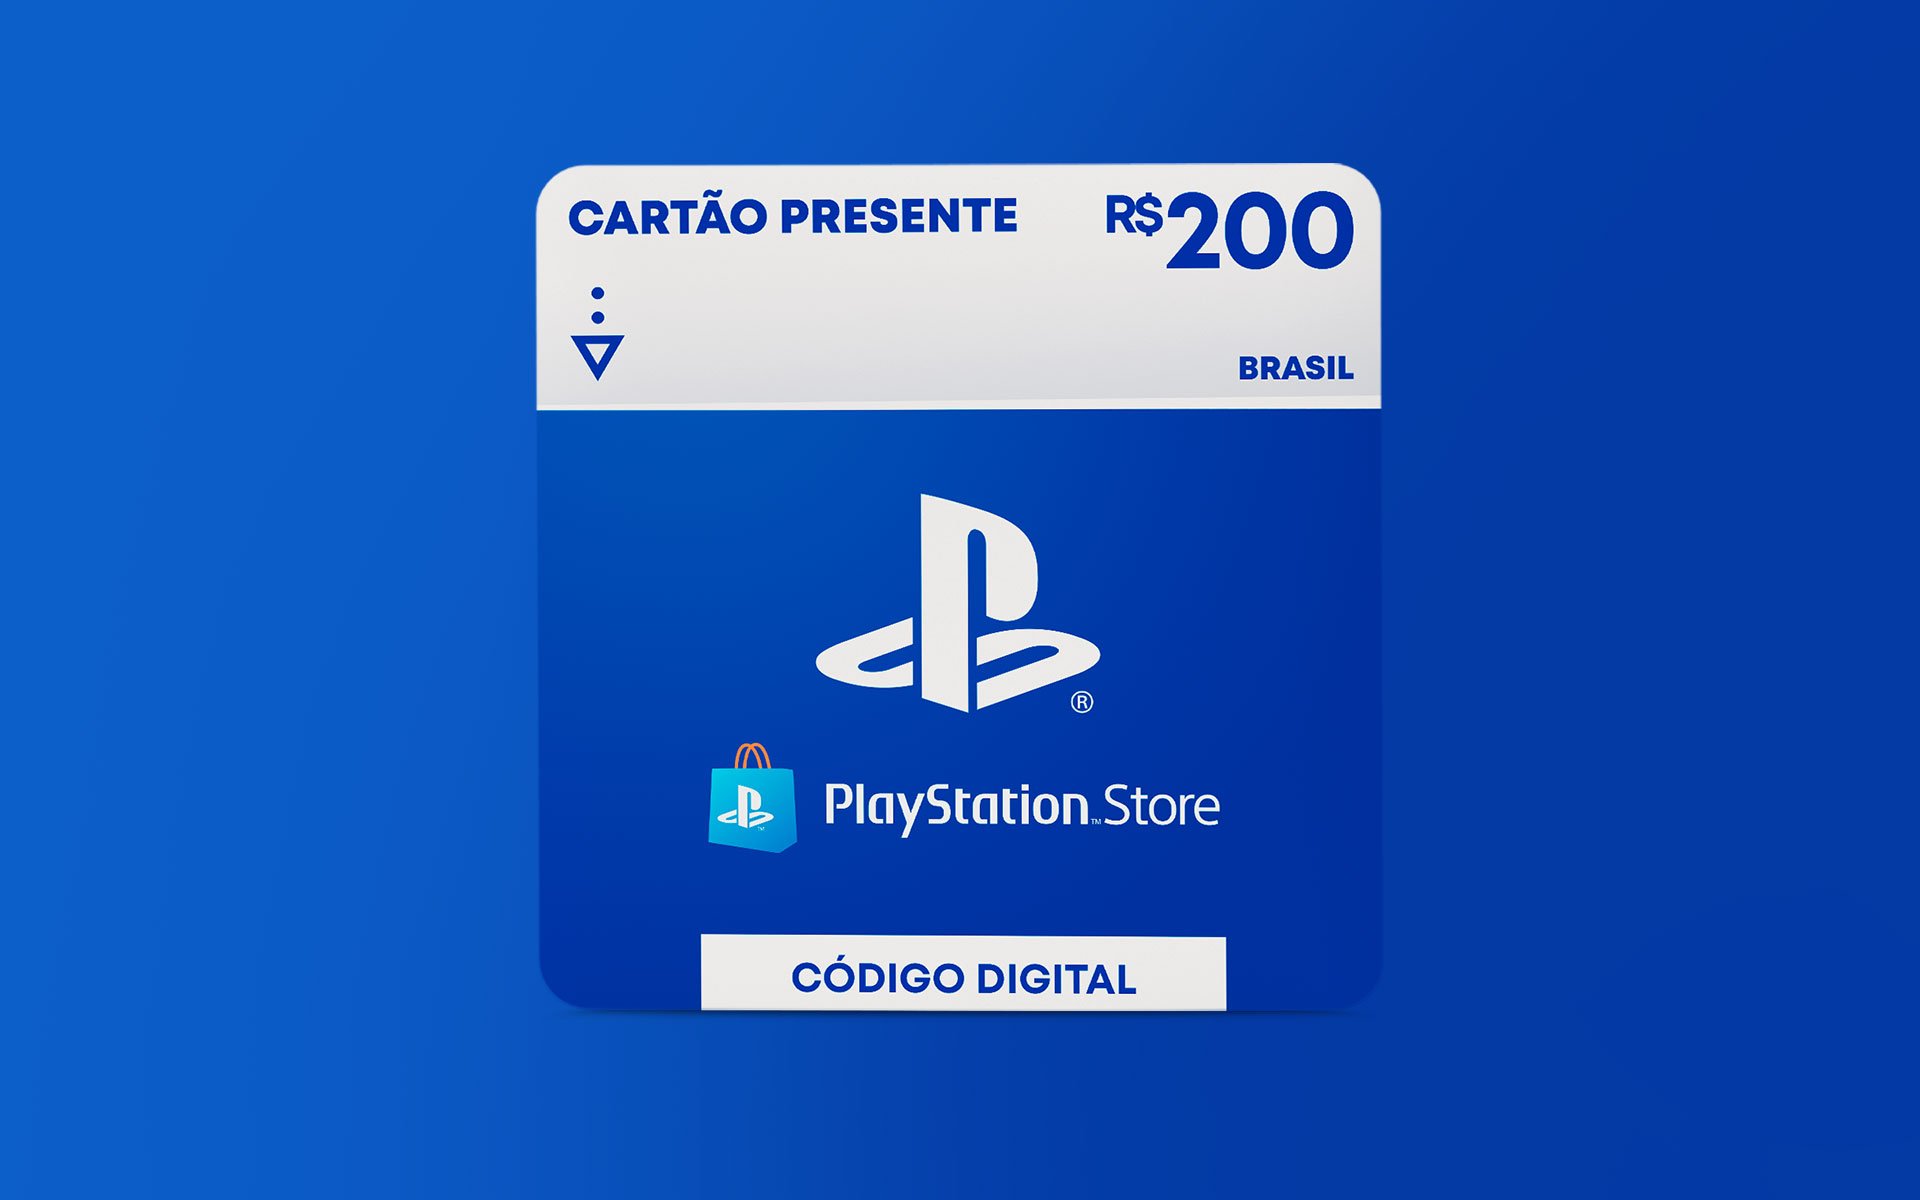 R$200 PlayStation Store - Cartão Presente Digital [Exclusivo Brasil] cover